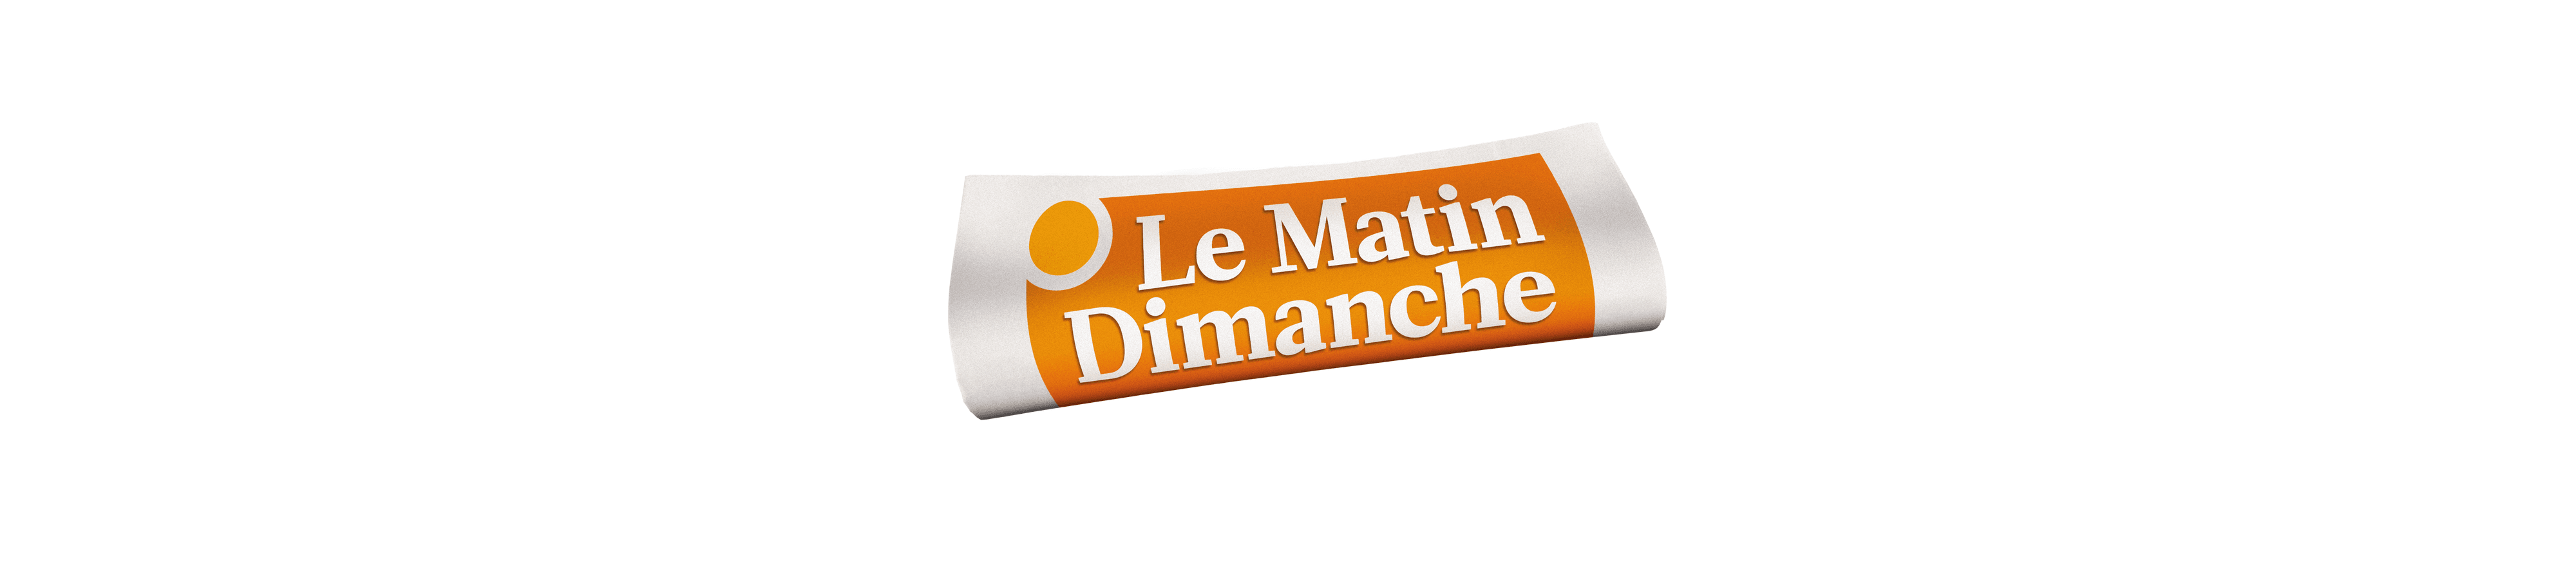 LeMatinDimanche banner